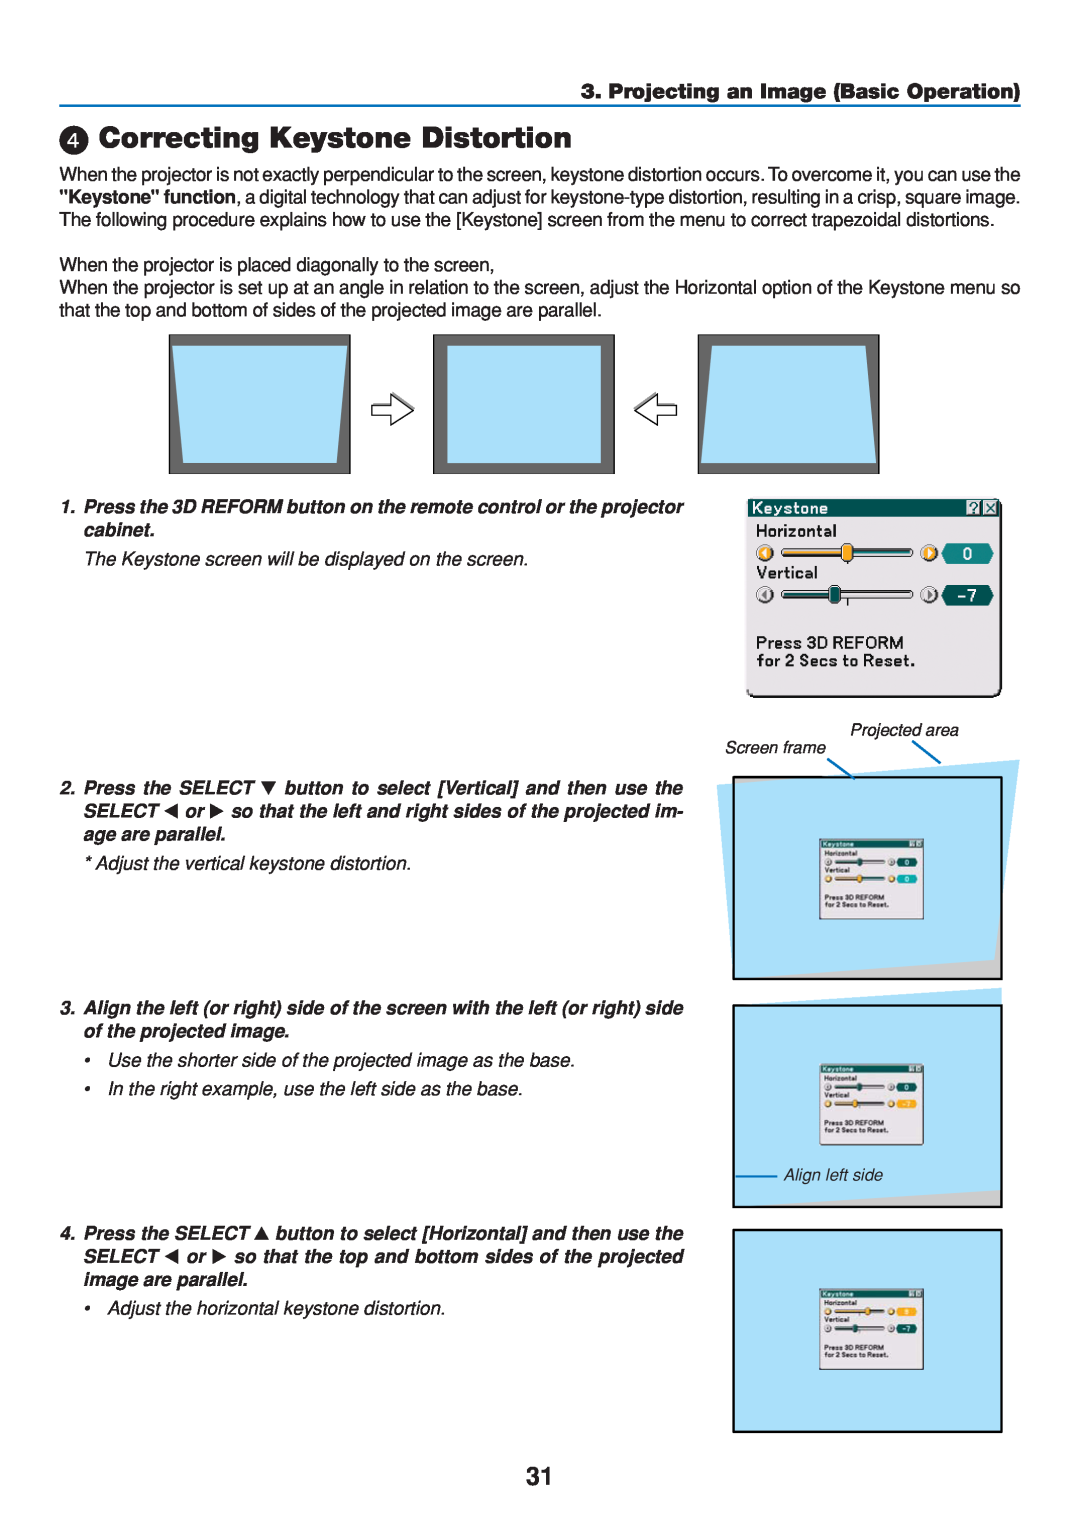 Dukane 8808 user manual Correcting Keystone Distortion, Projecting an Image Basic Operation 